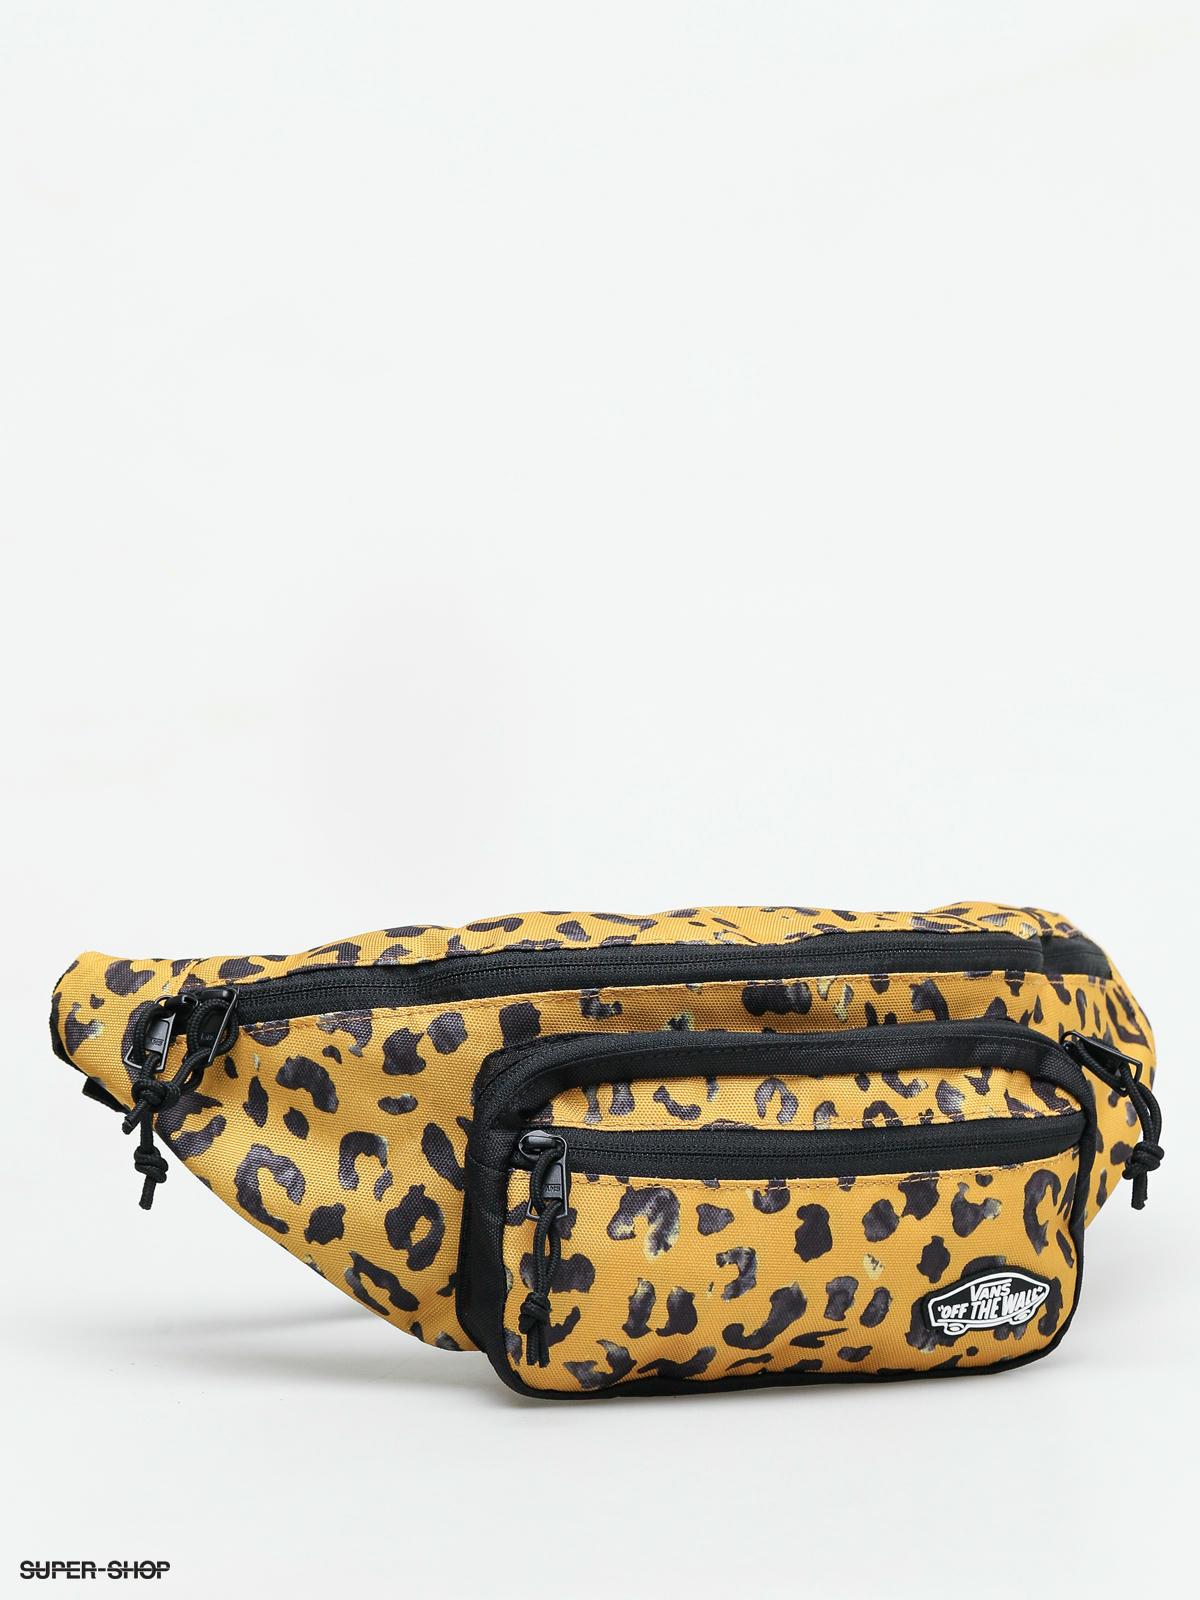 vans leopard bag